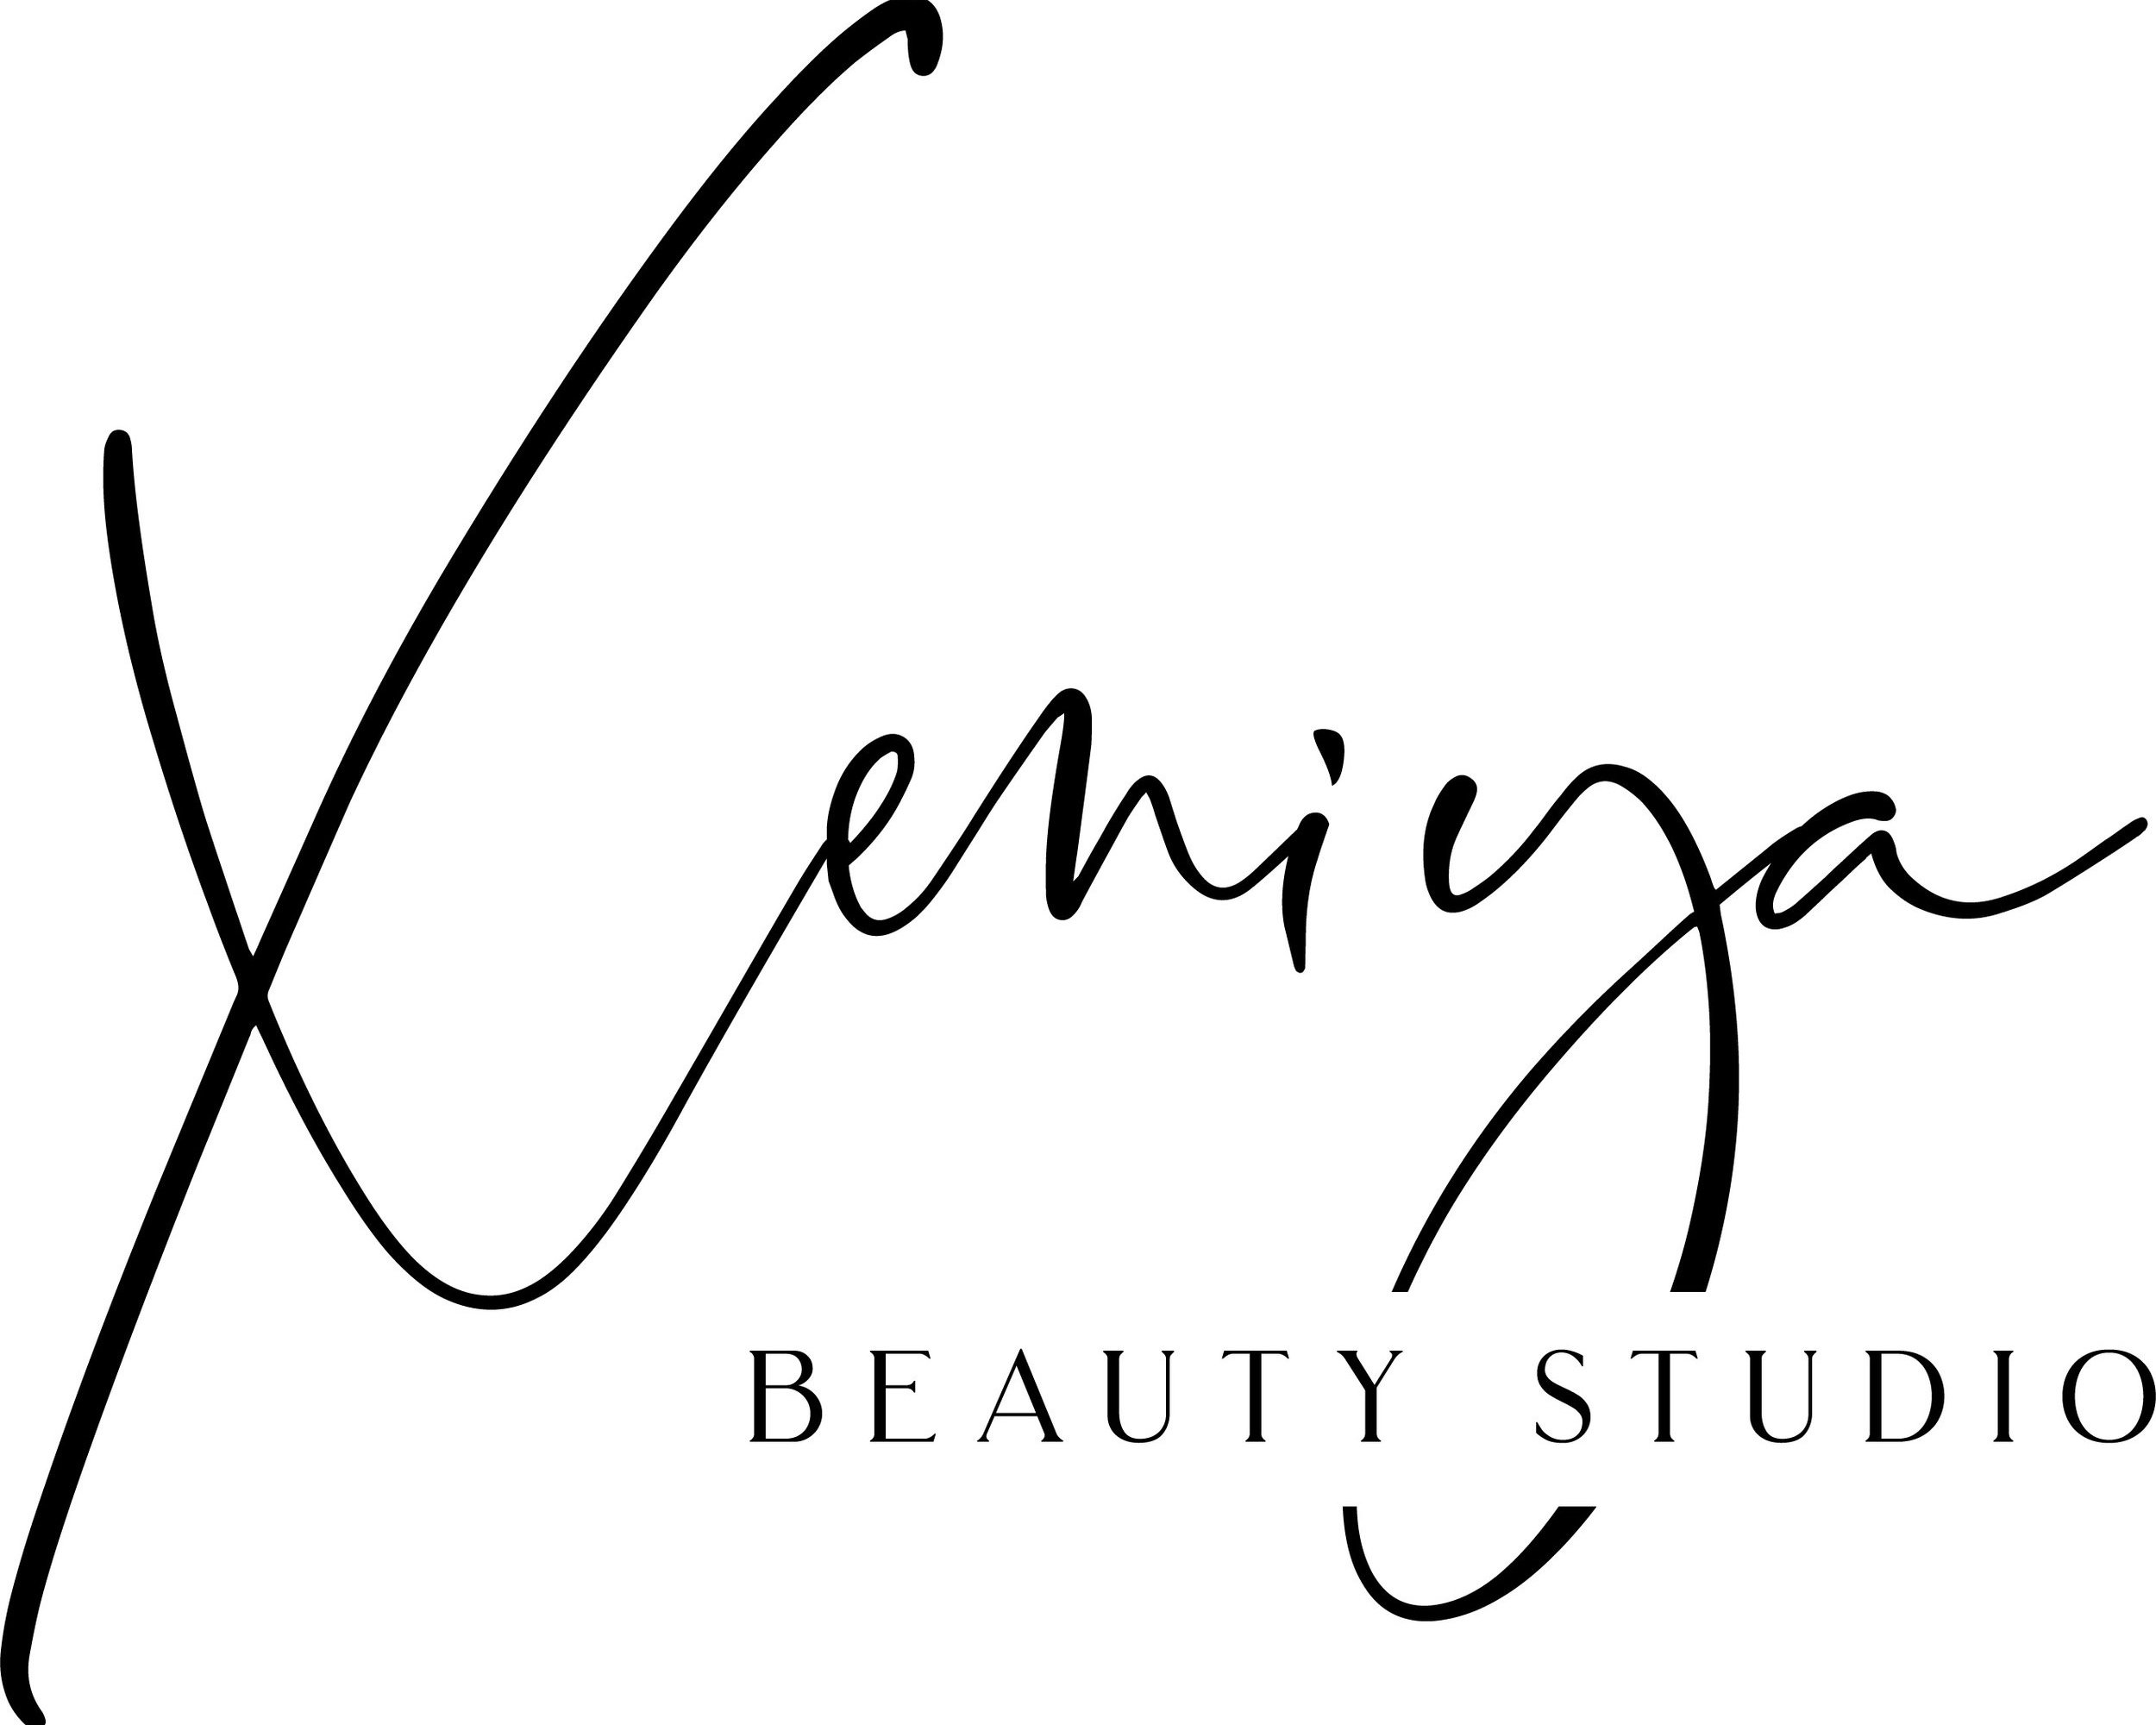 Xeniya Beauty Studio 